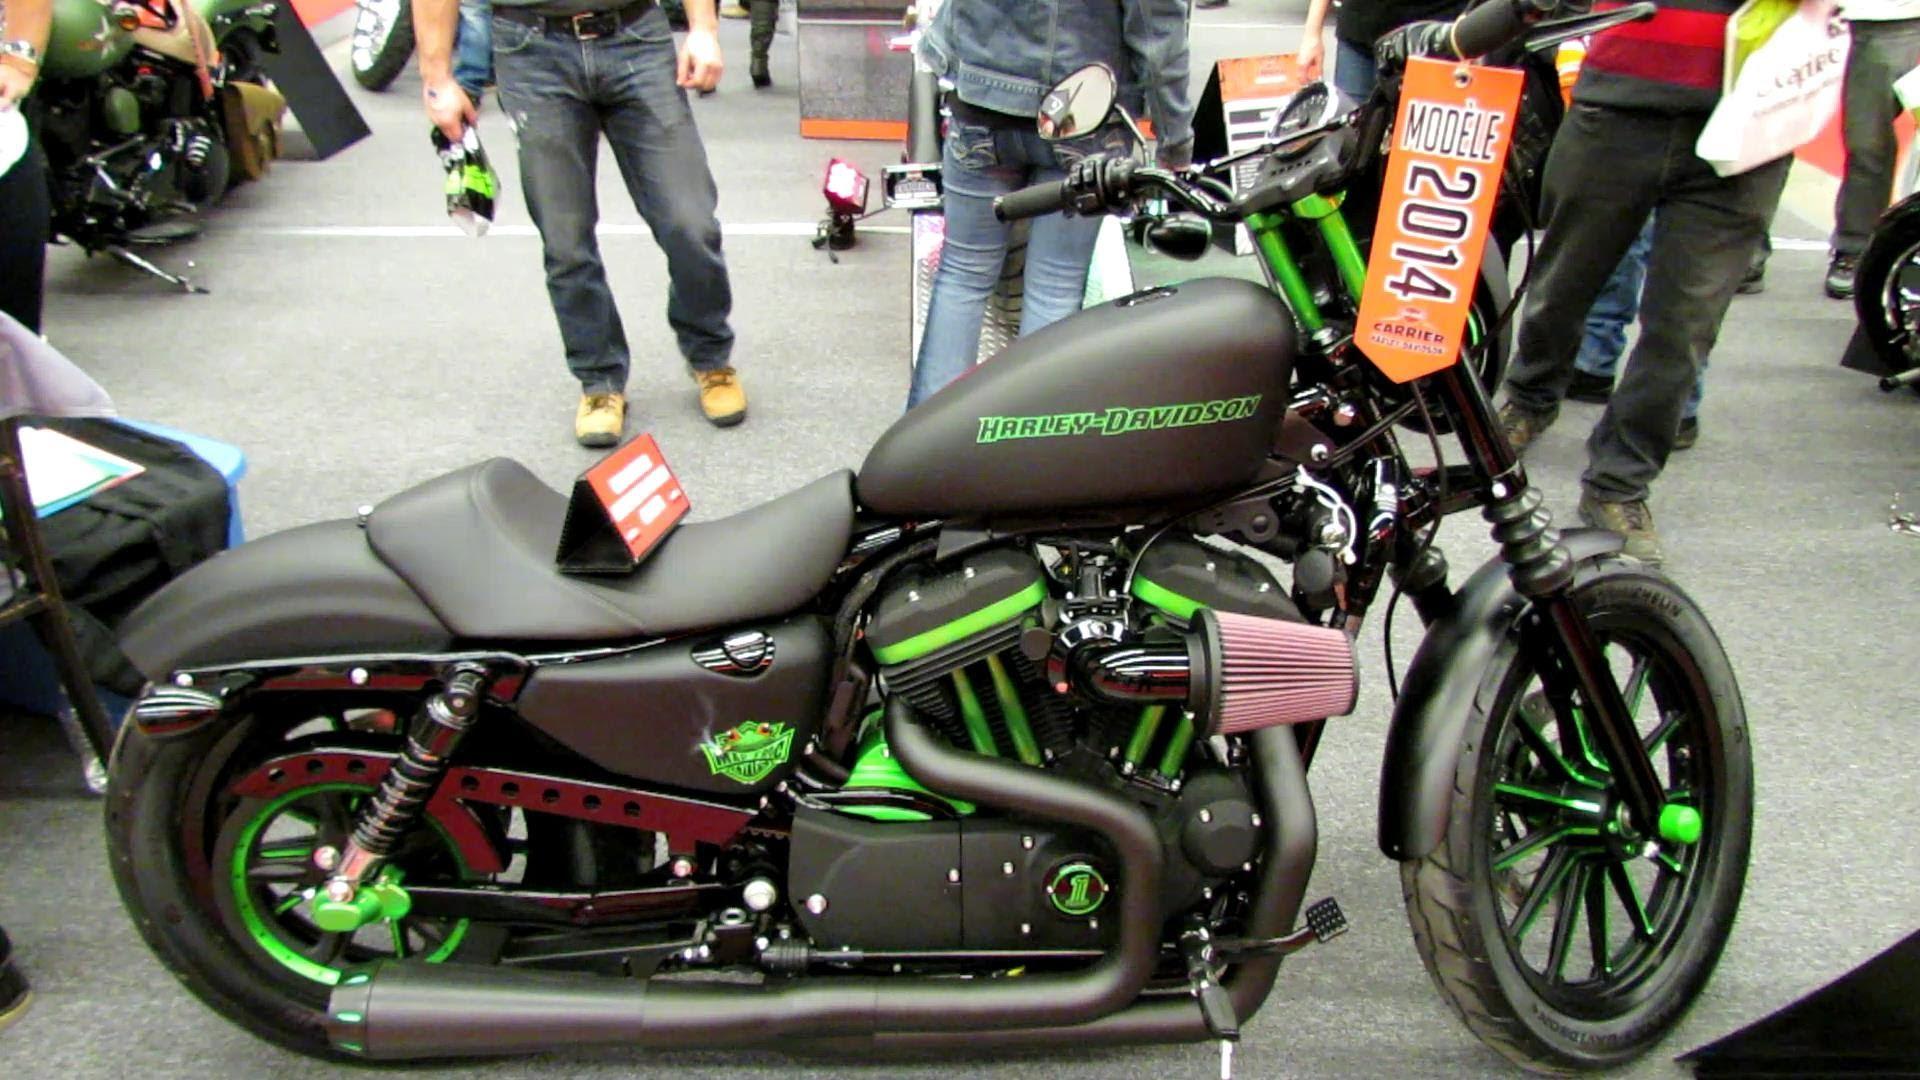 Harley Davidson Sportster Iron 883 Custom